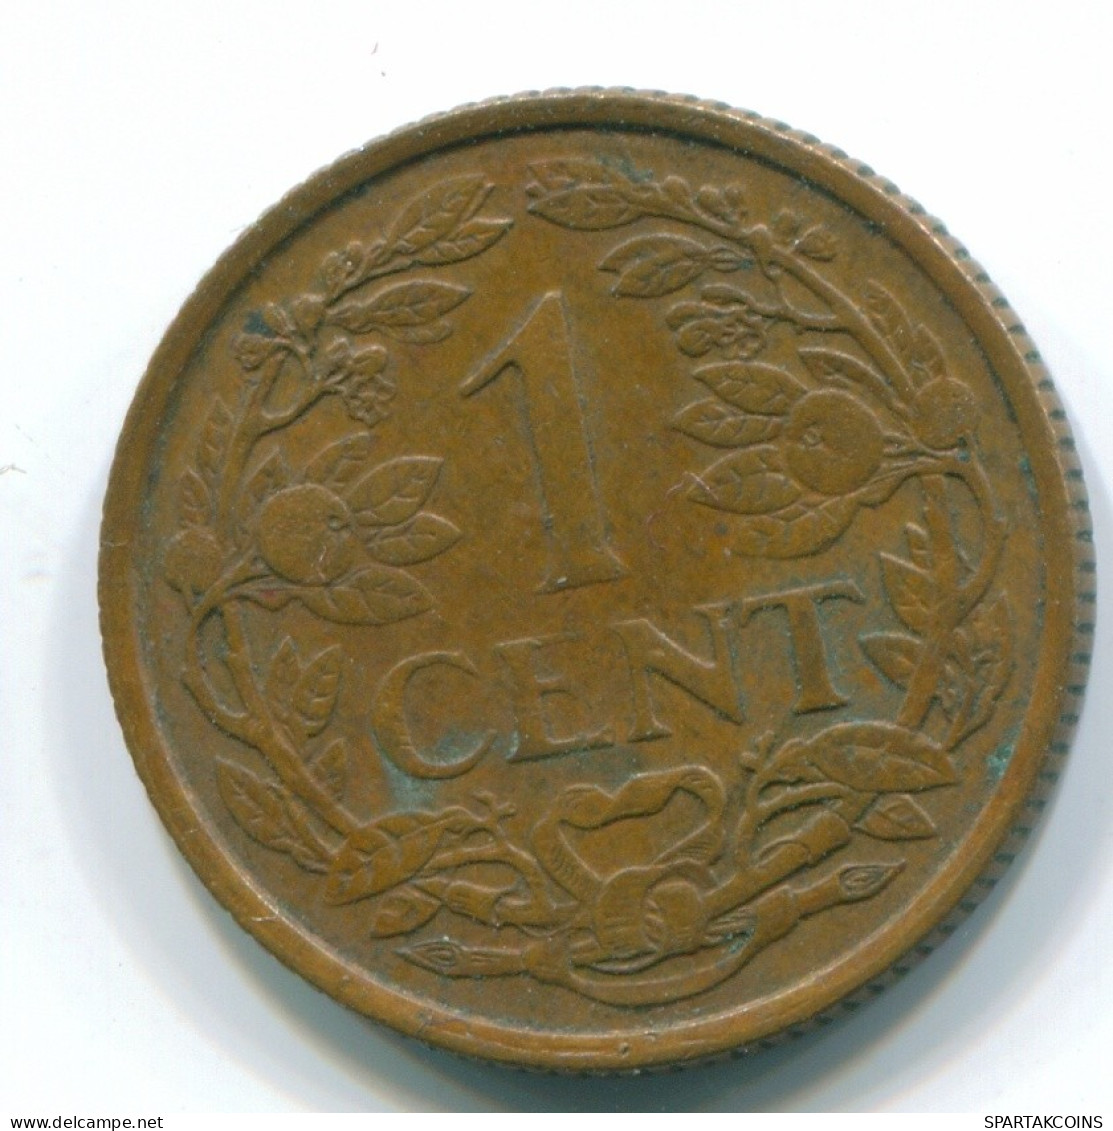 1 CENT 1963 ANTILLAS NEERLANDESAS Bronze Fish Colonial Moneda #S11074.E.A - Netherlands Antilles